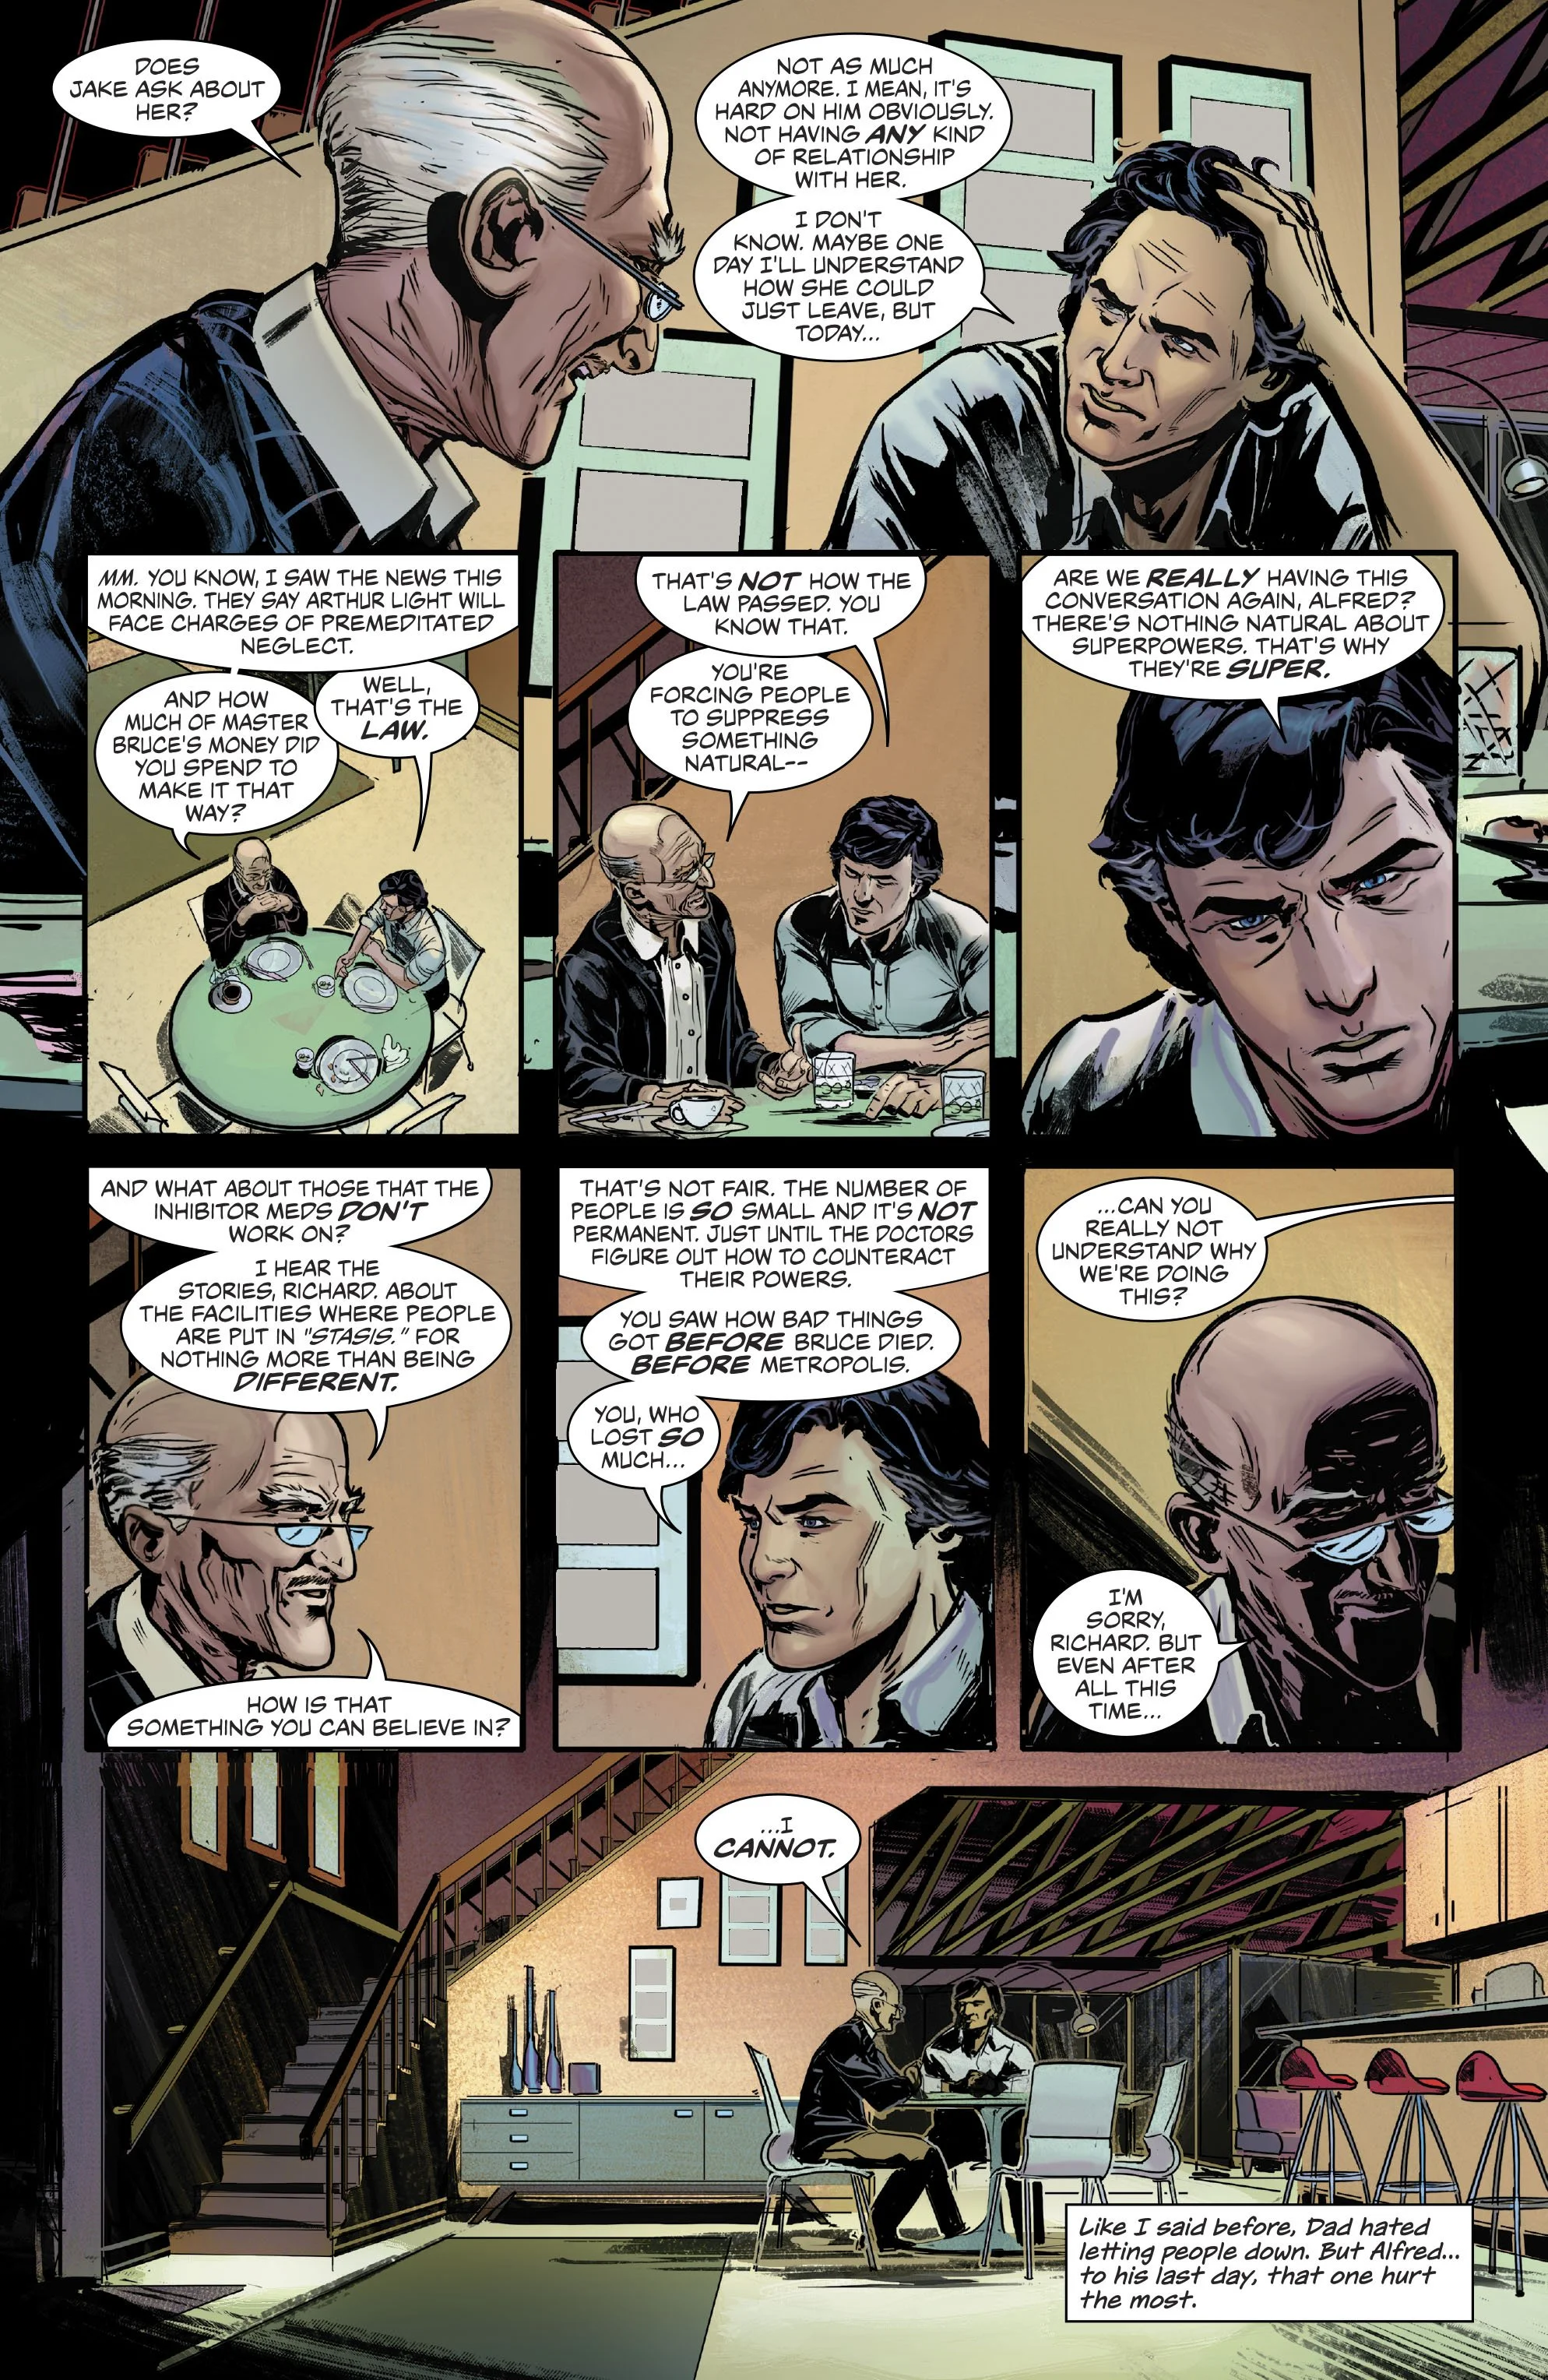 В мире комикса Nightwing: The New Order суперспособности вне закона - фото 4